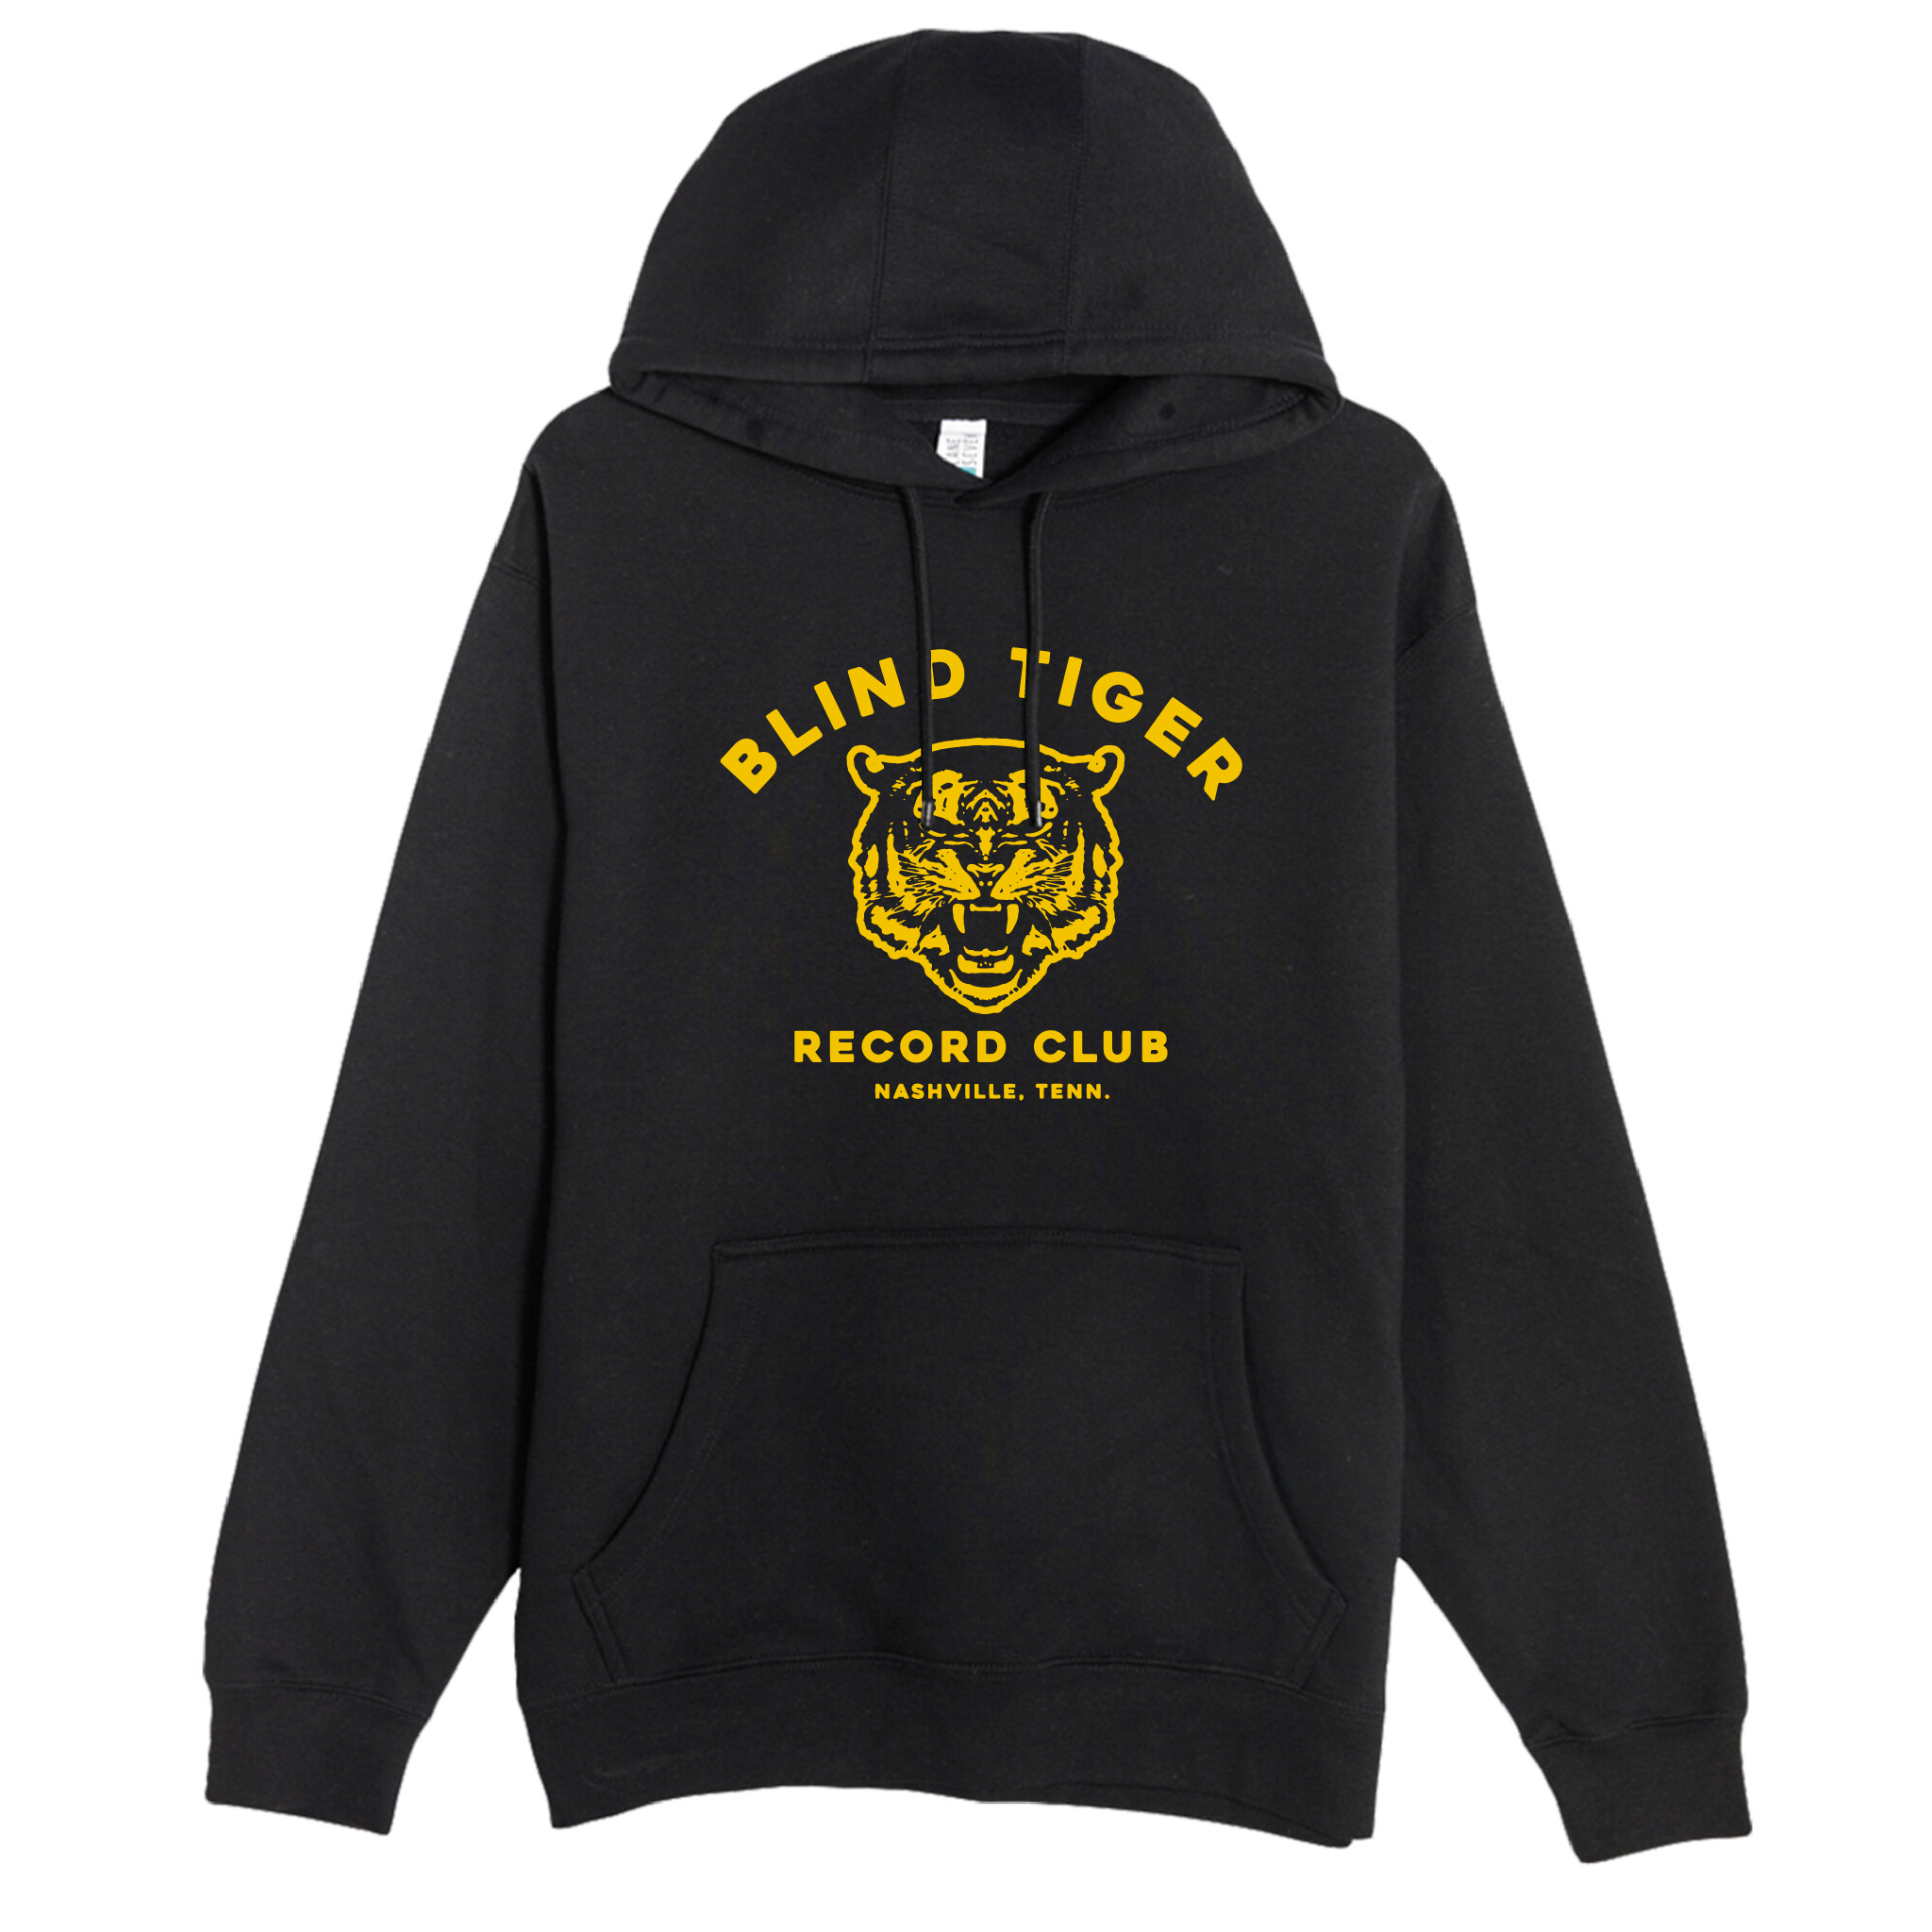 B.T.R.C. Pullover Hoodie (Black w/Gold Tiger Logo) - Blind Tiger Record Club